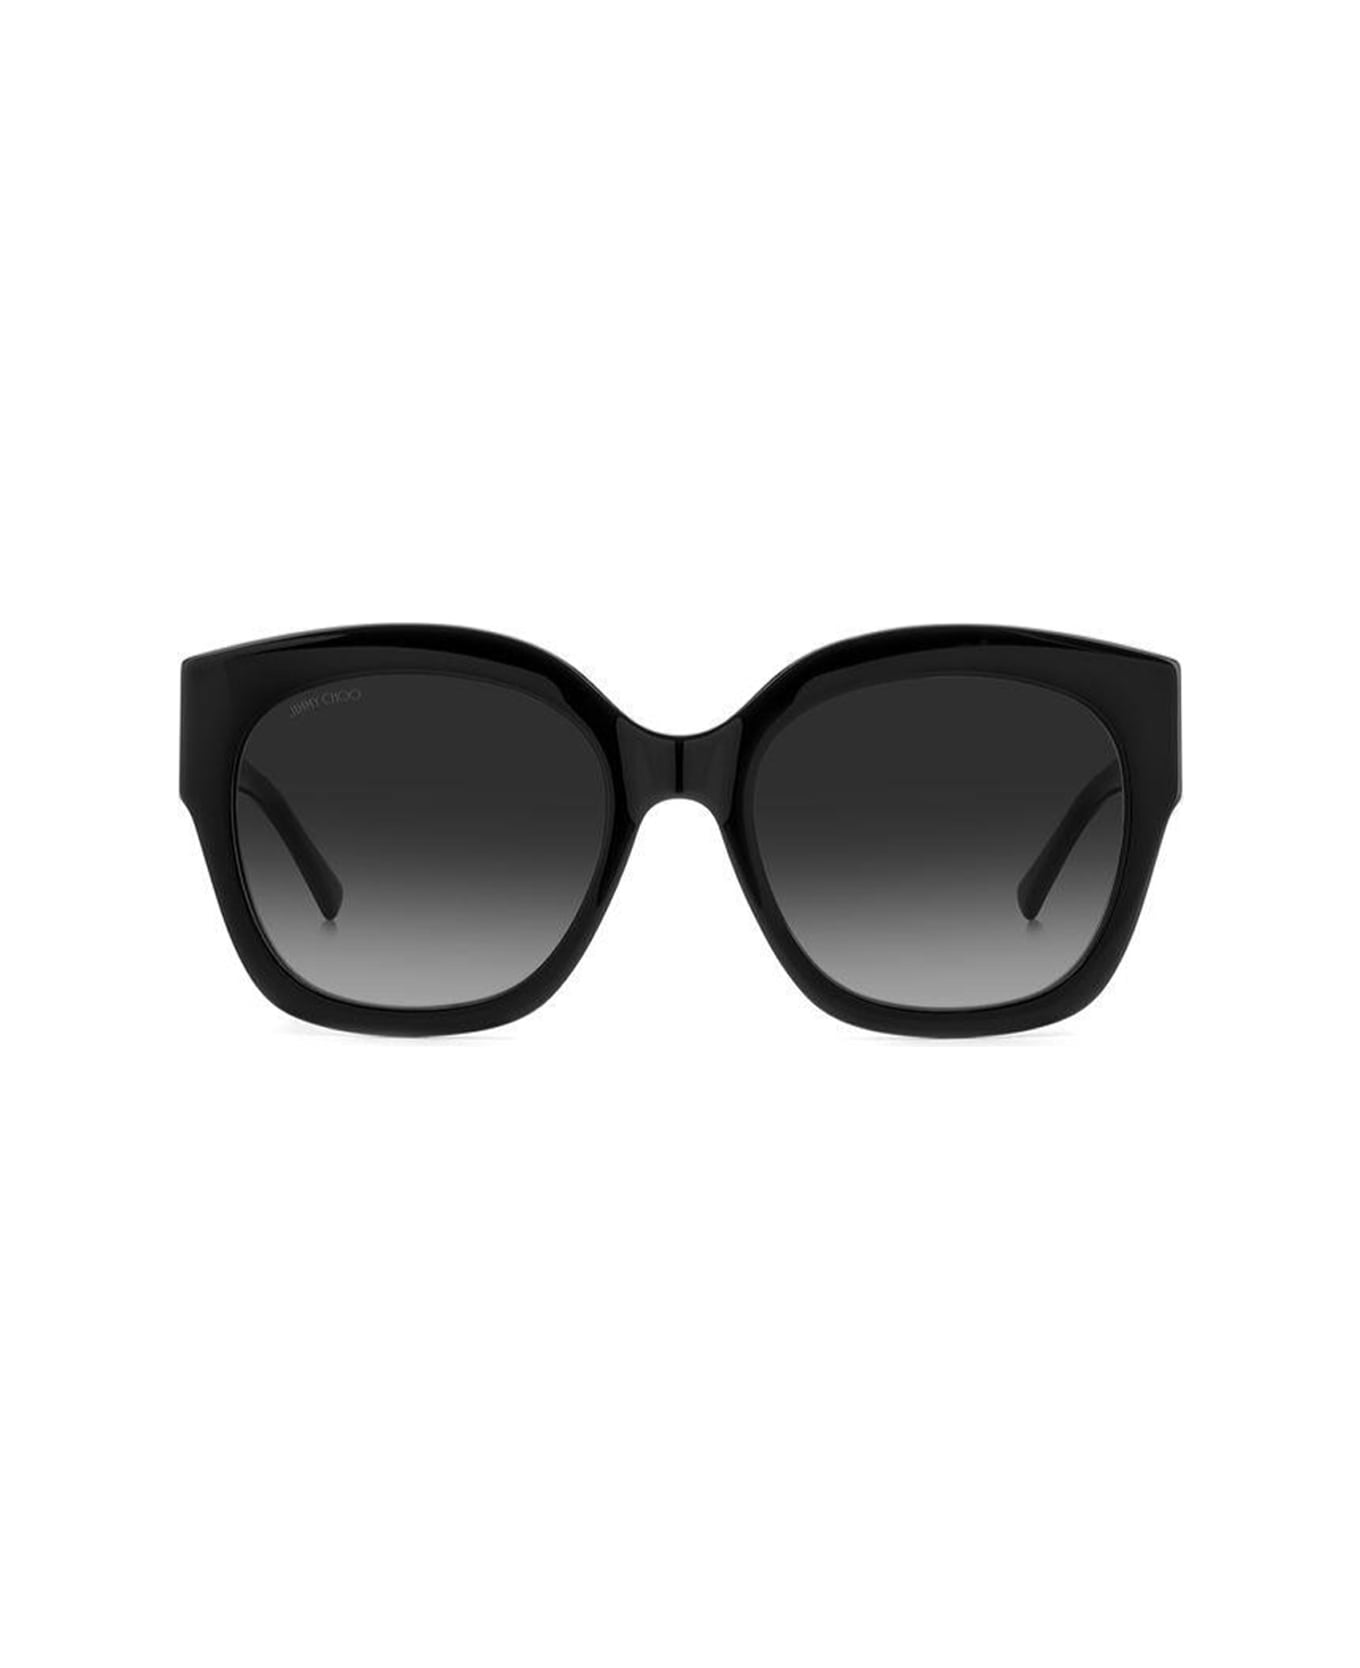 Jimmy Choo Eyewear Jc Leela/s 807/9o Black Sunglasses - Nero サングラス